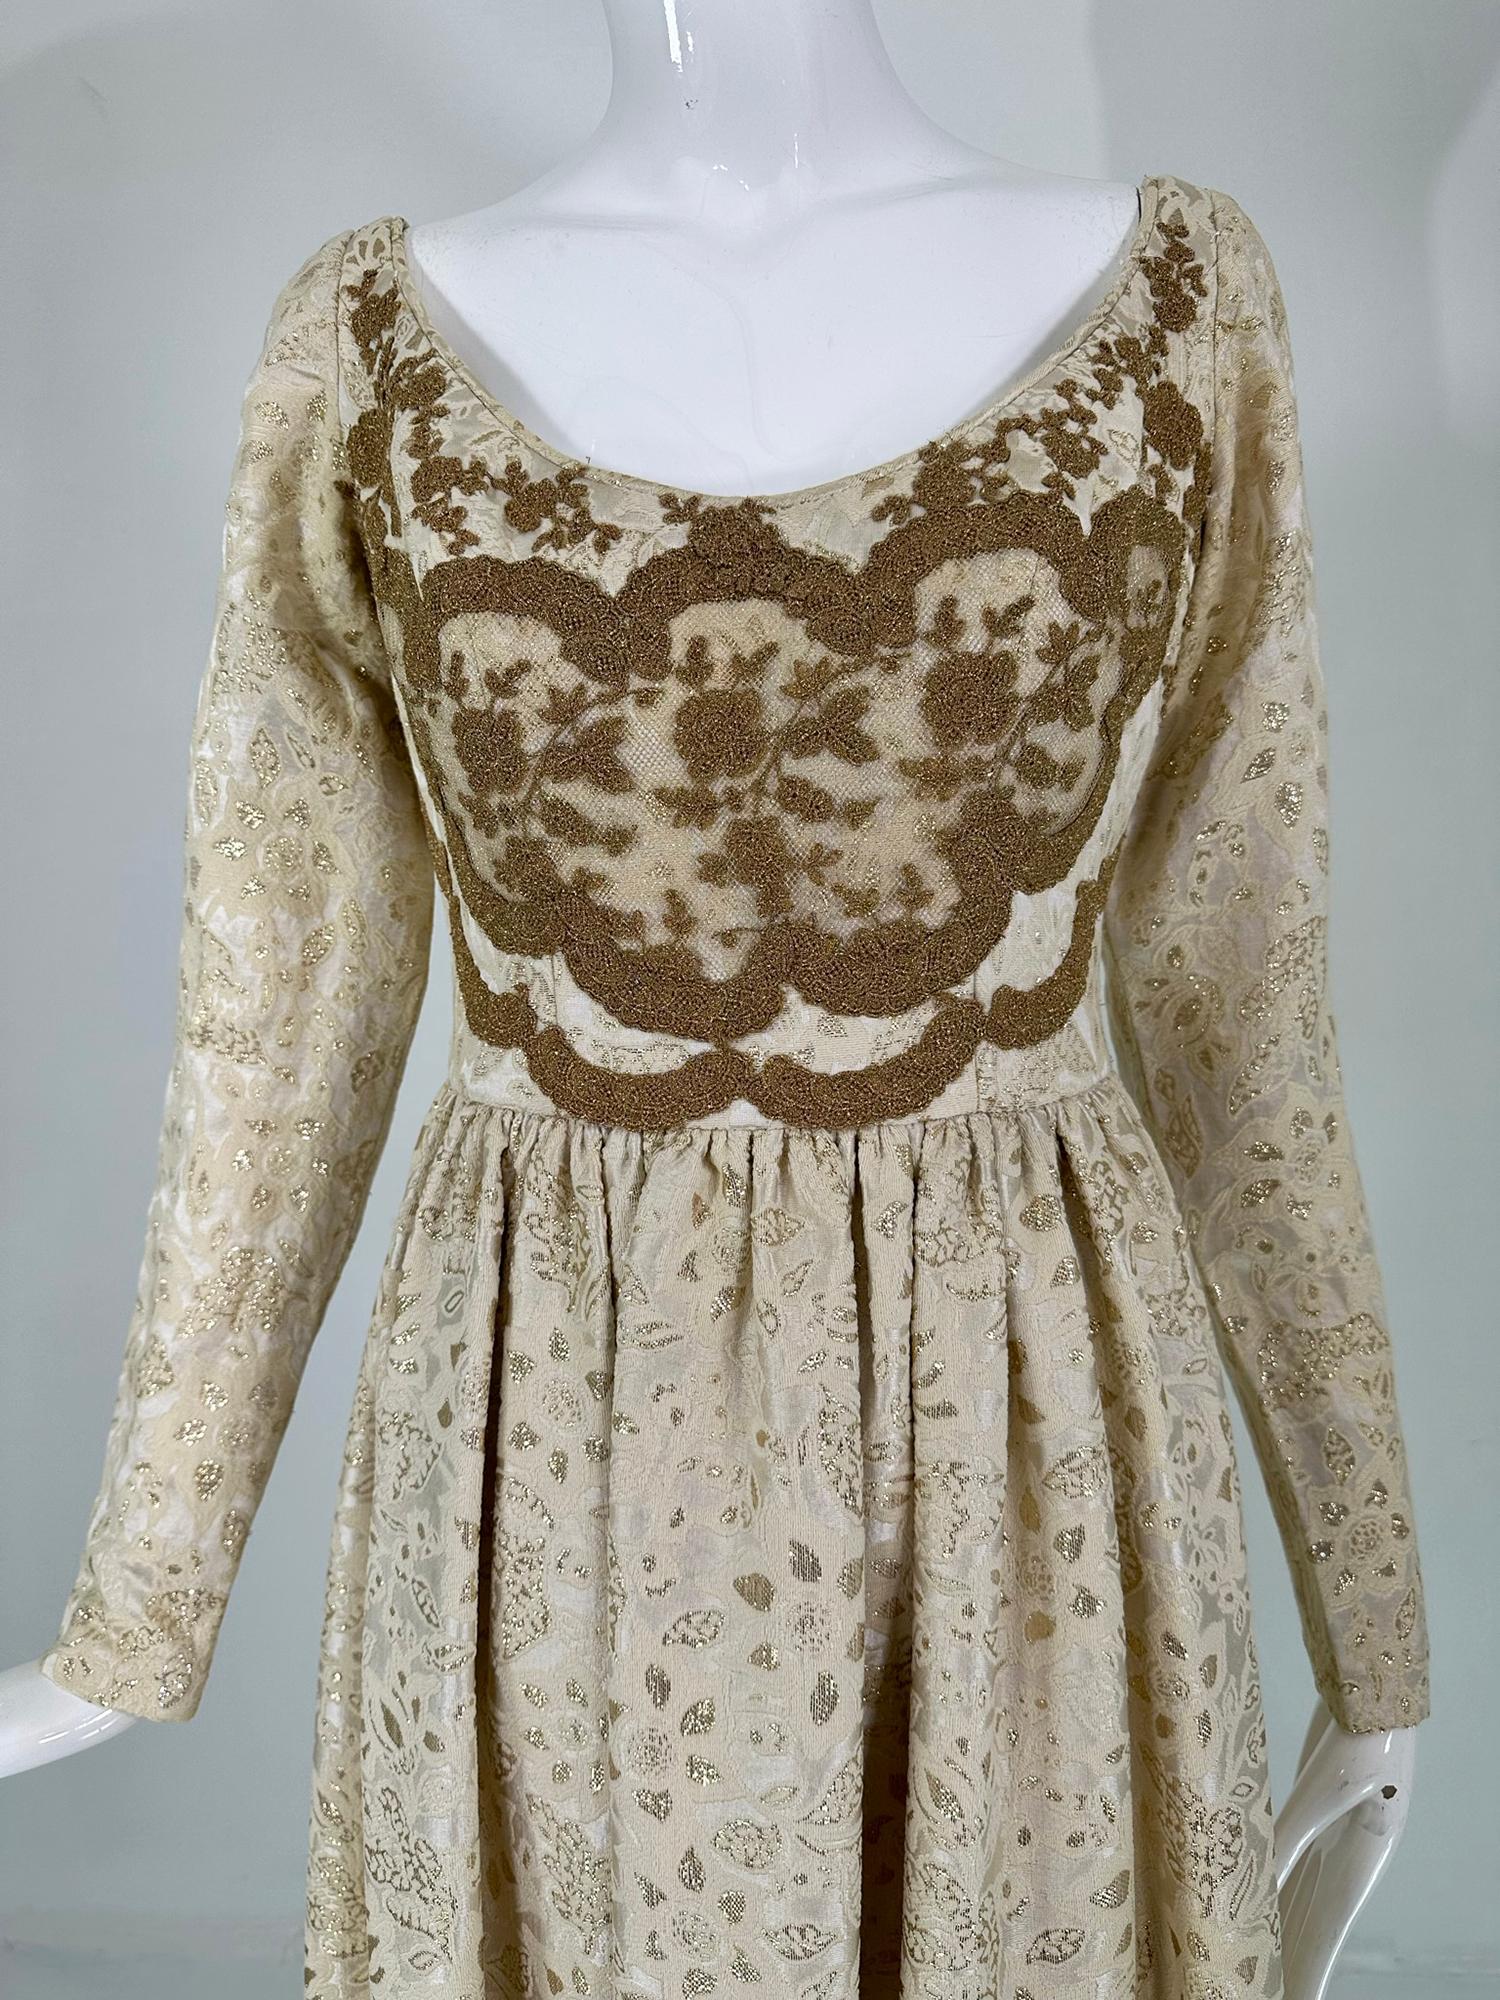 Galitizne Couture Renaissance Style Gown in Cream & Gold Metallic Brocade 1970s For Sale 10